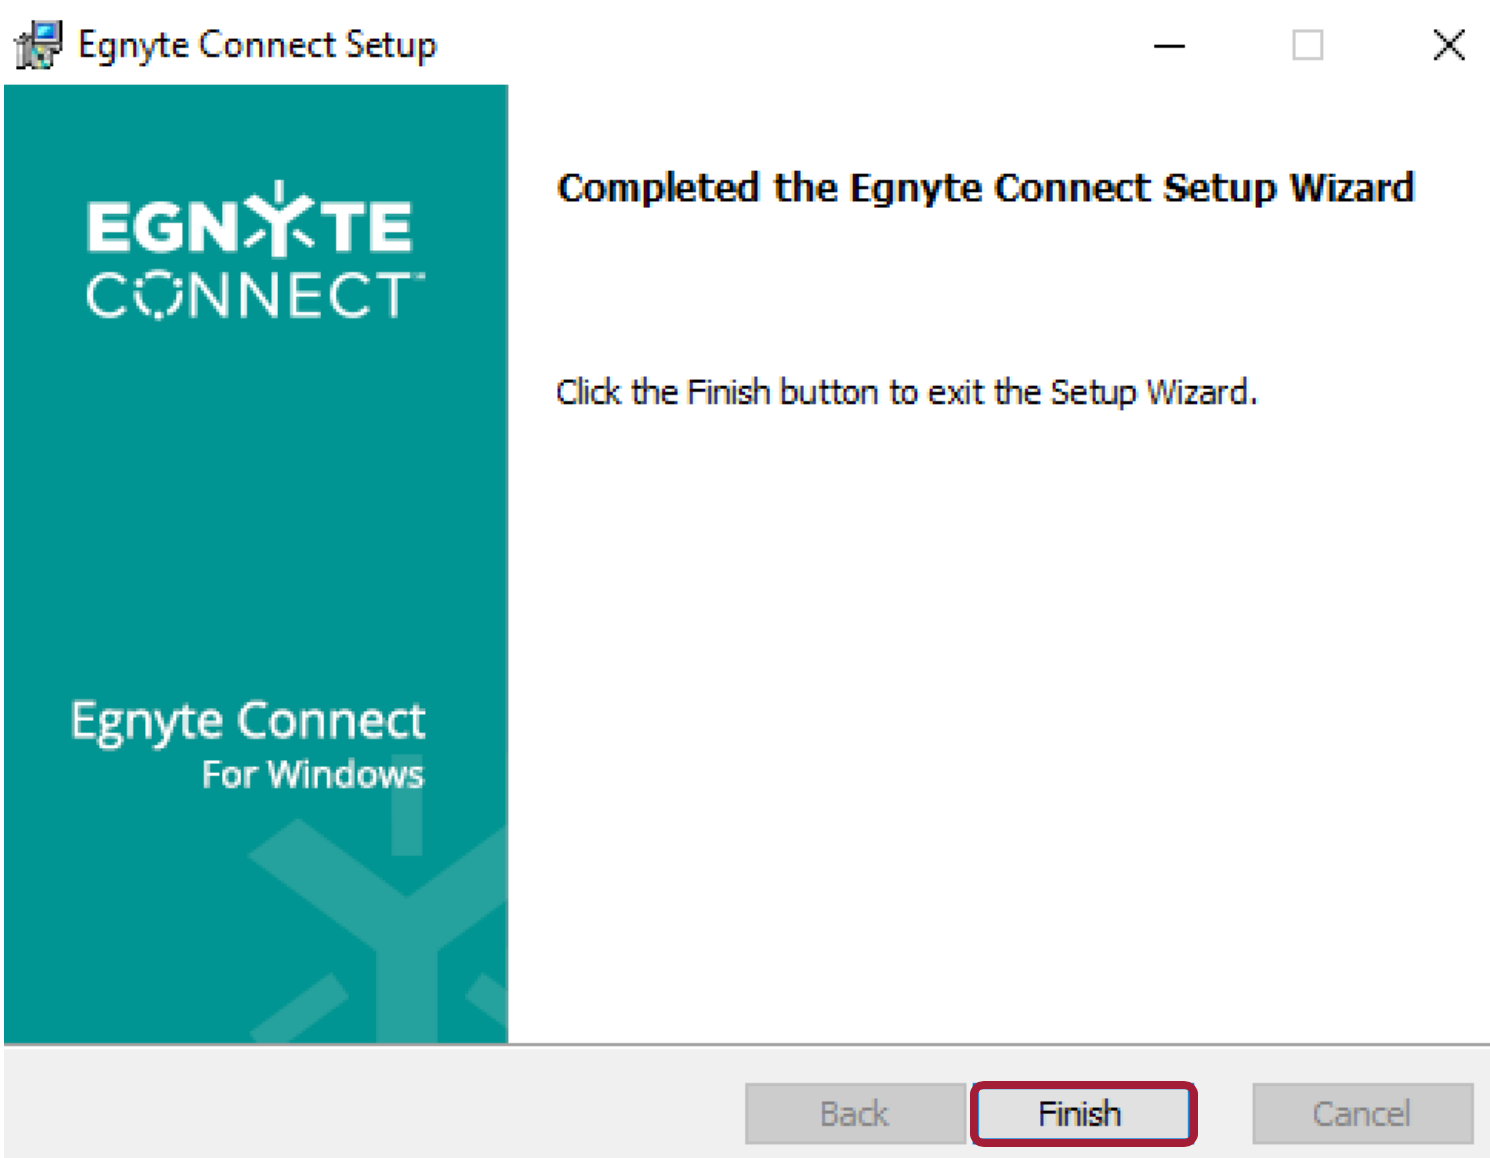 egnyte desktop sync 9.4 not installing